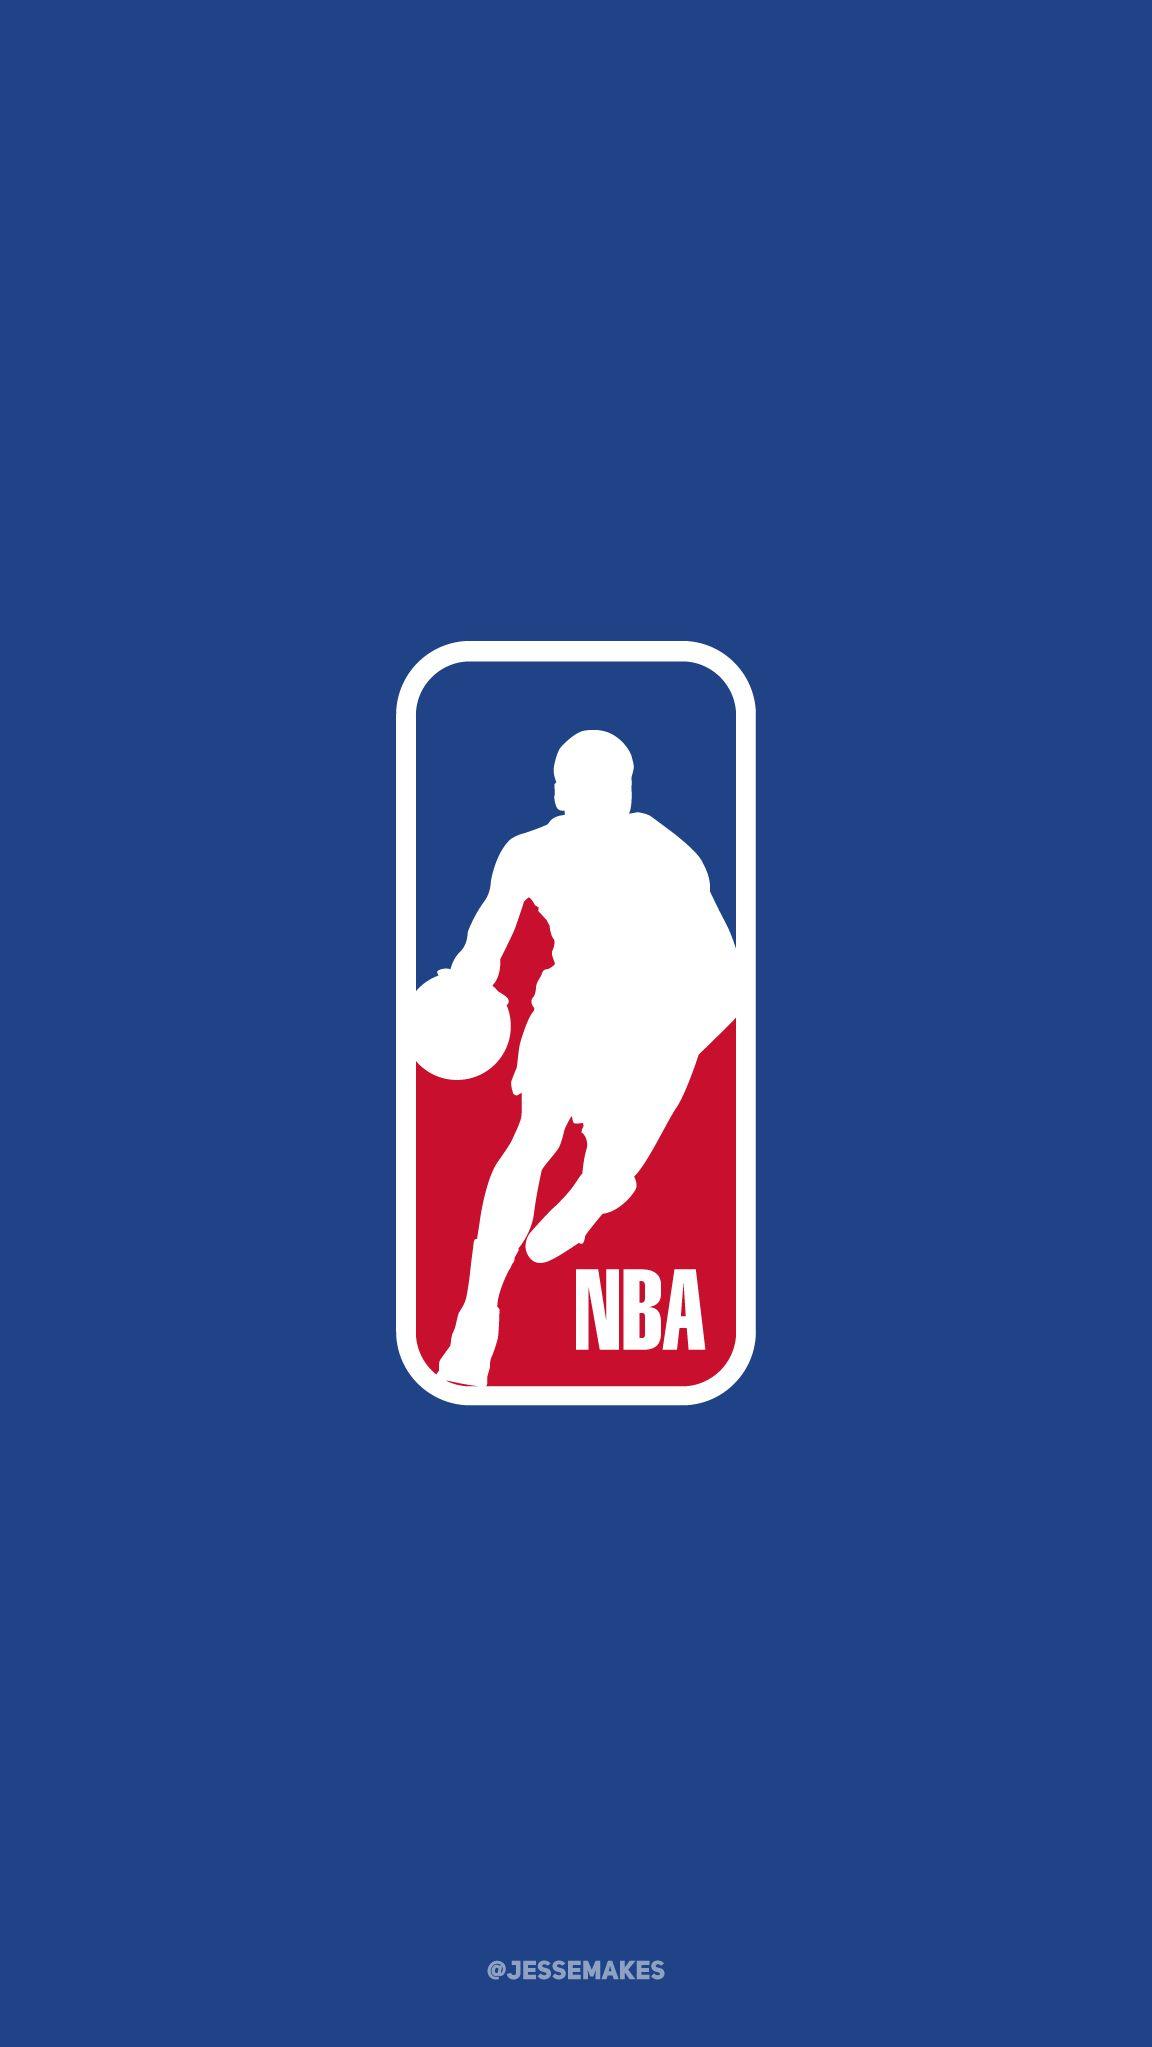 John Wall Logo - John Wall as the subject of the NBA logo. Part of my NBA Logo Redux ...